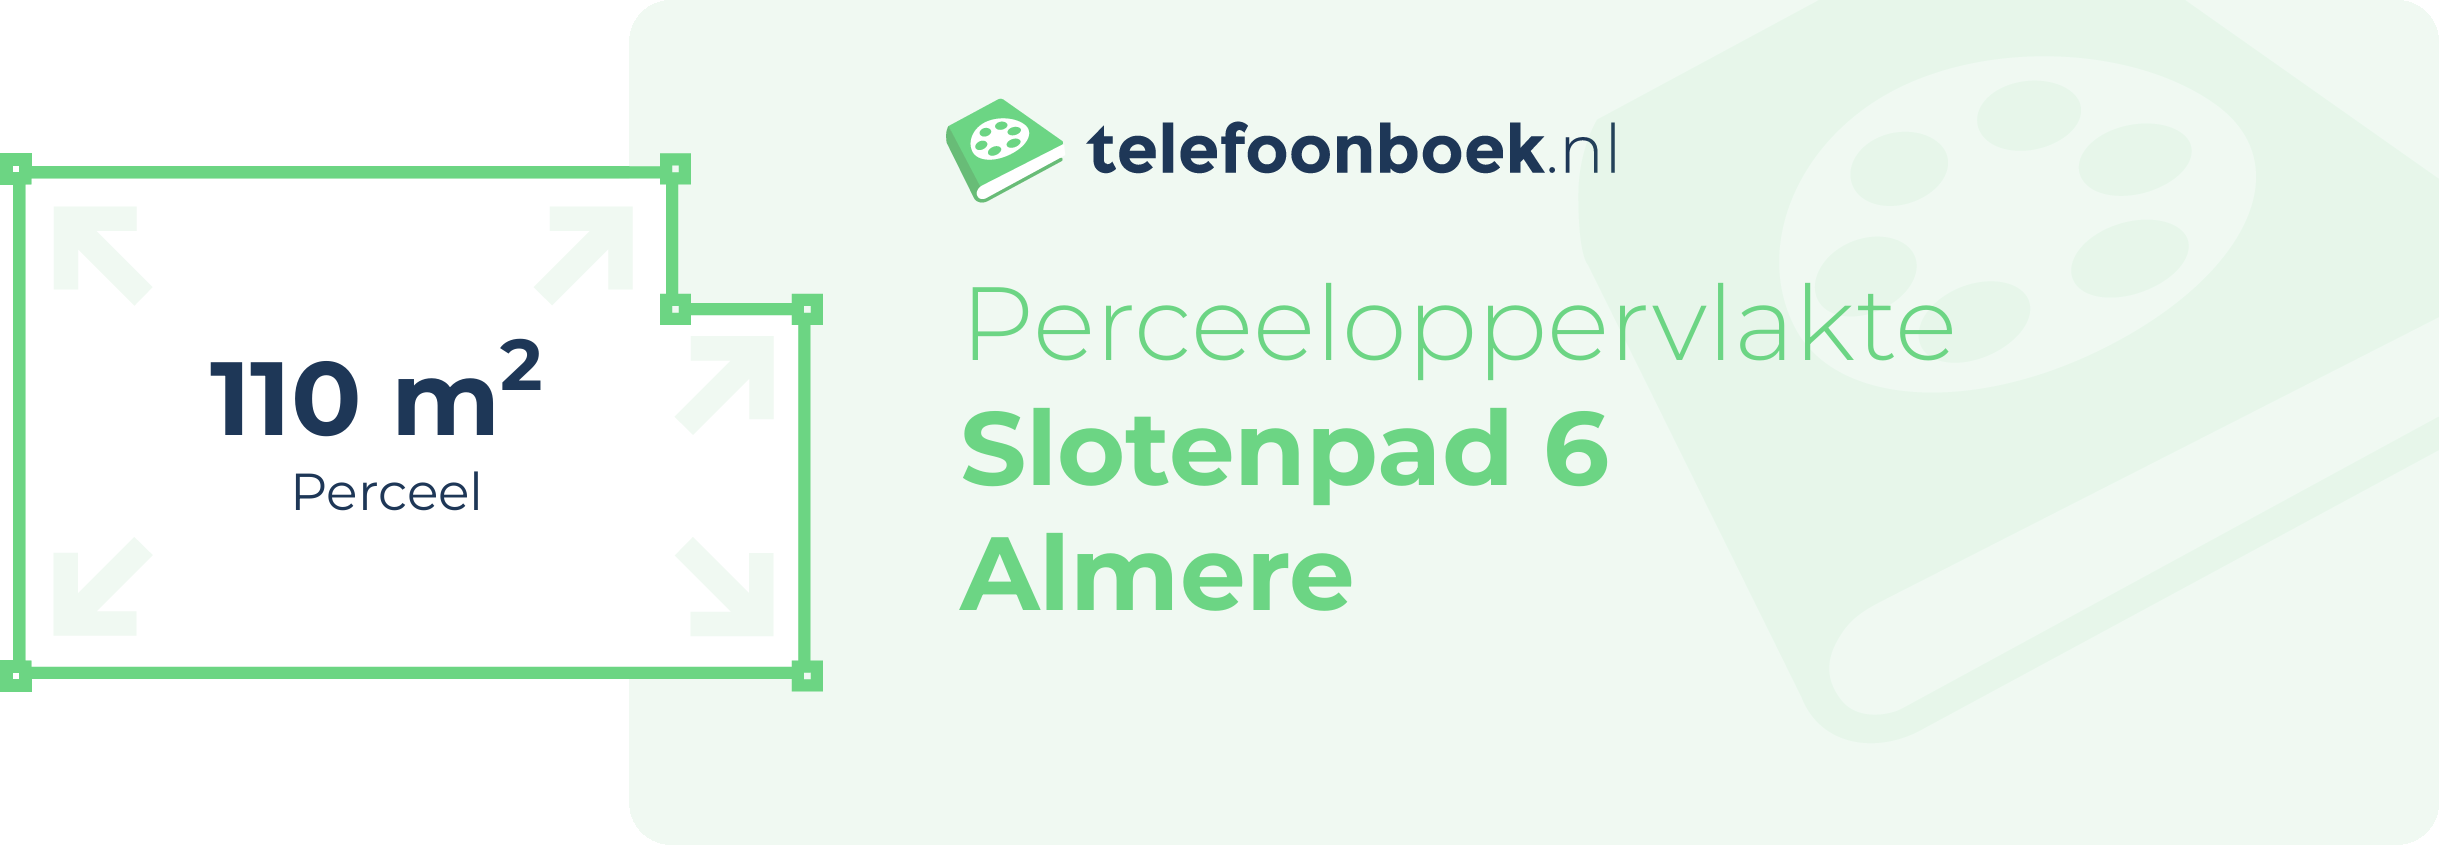 Perceeloppervlakte Slotenpad 6 Almere